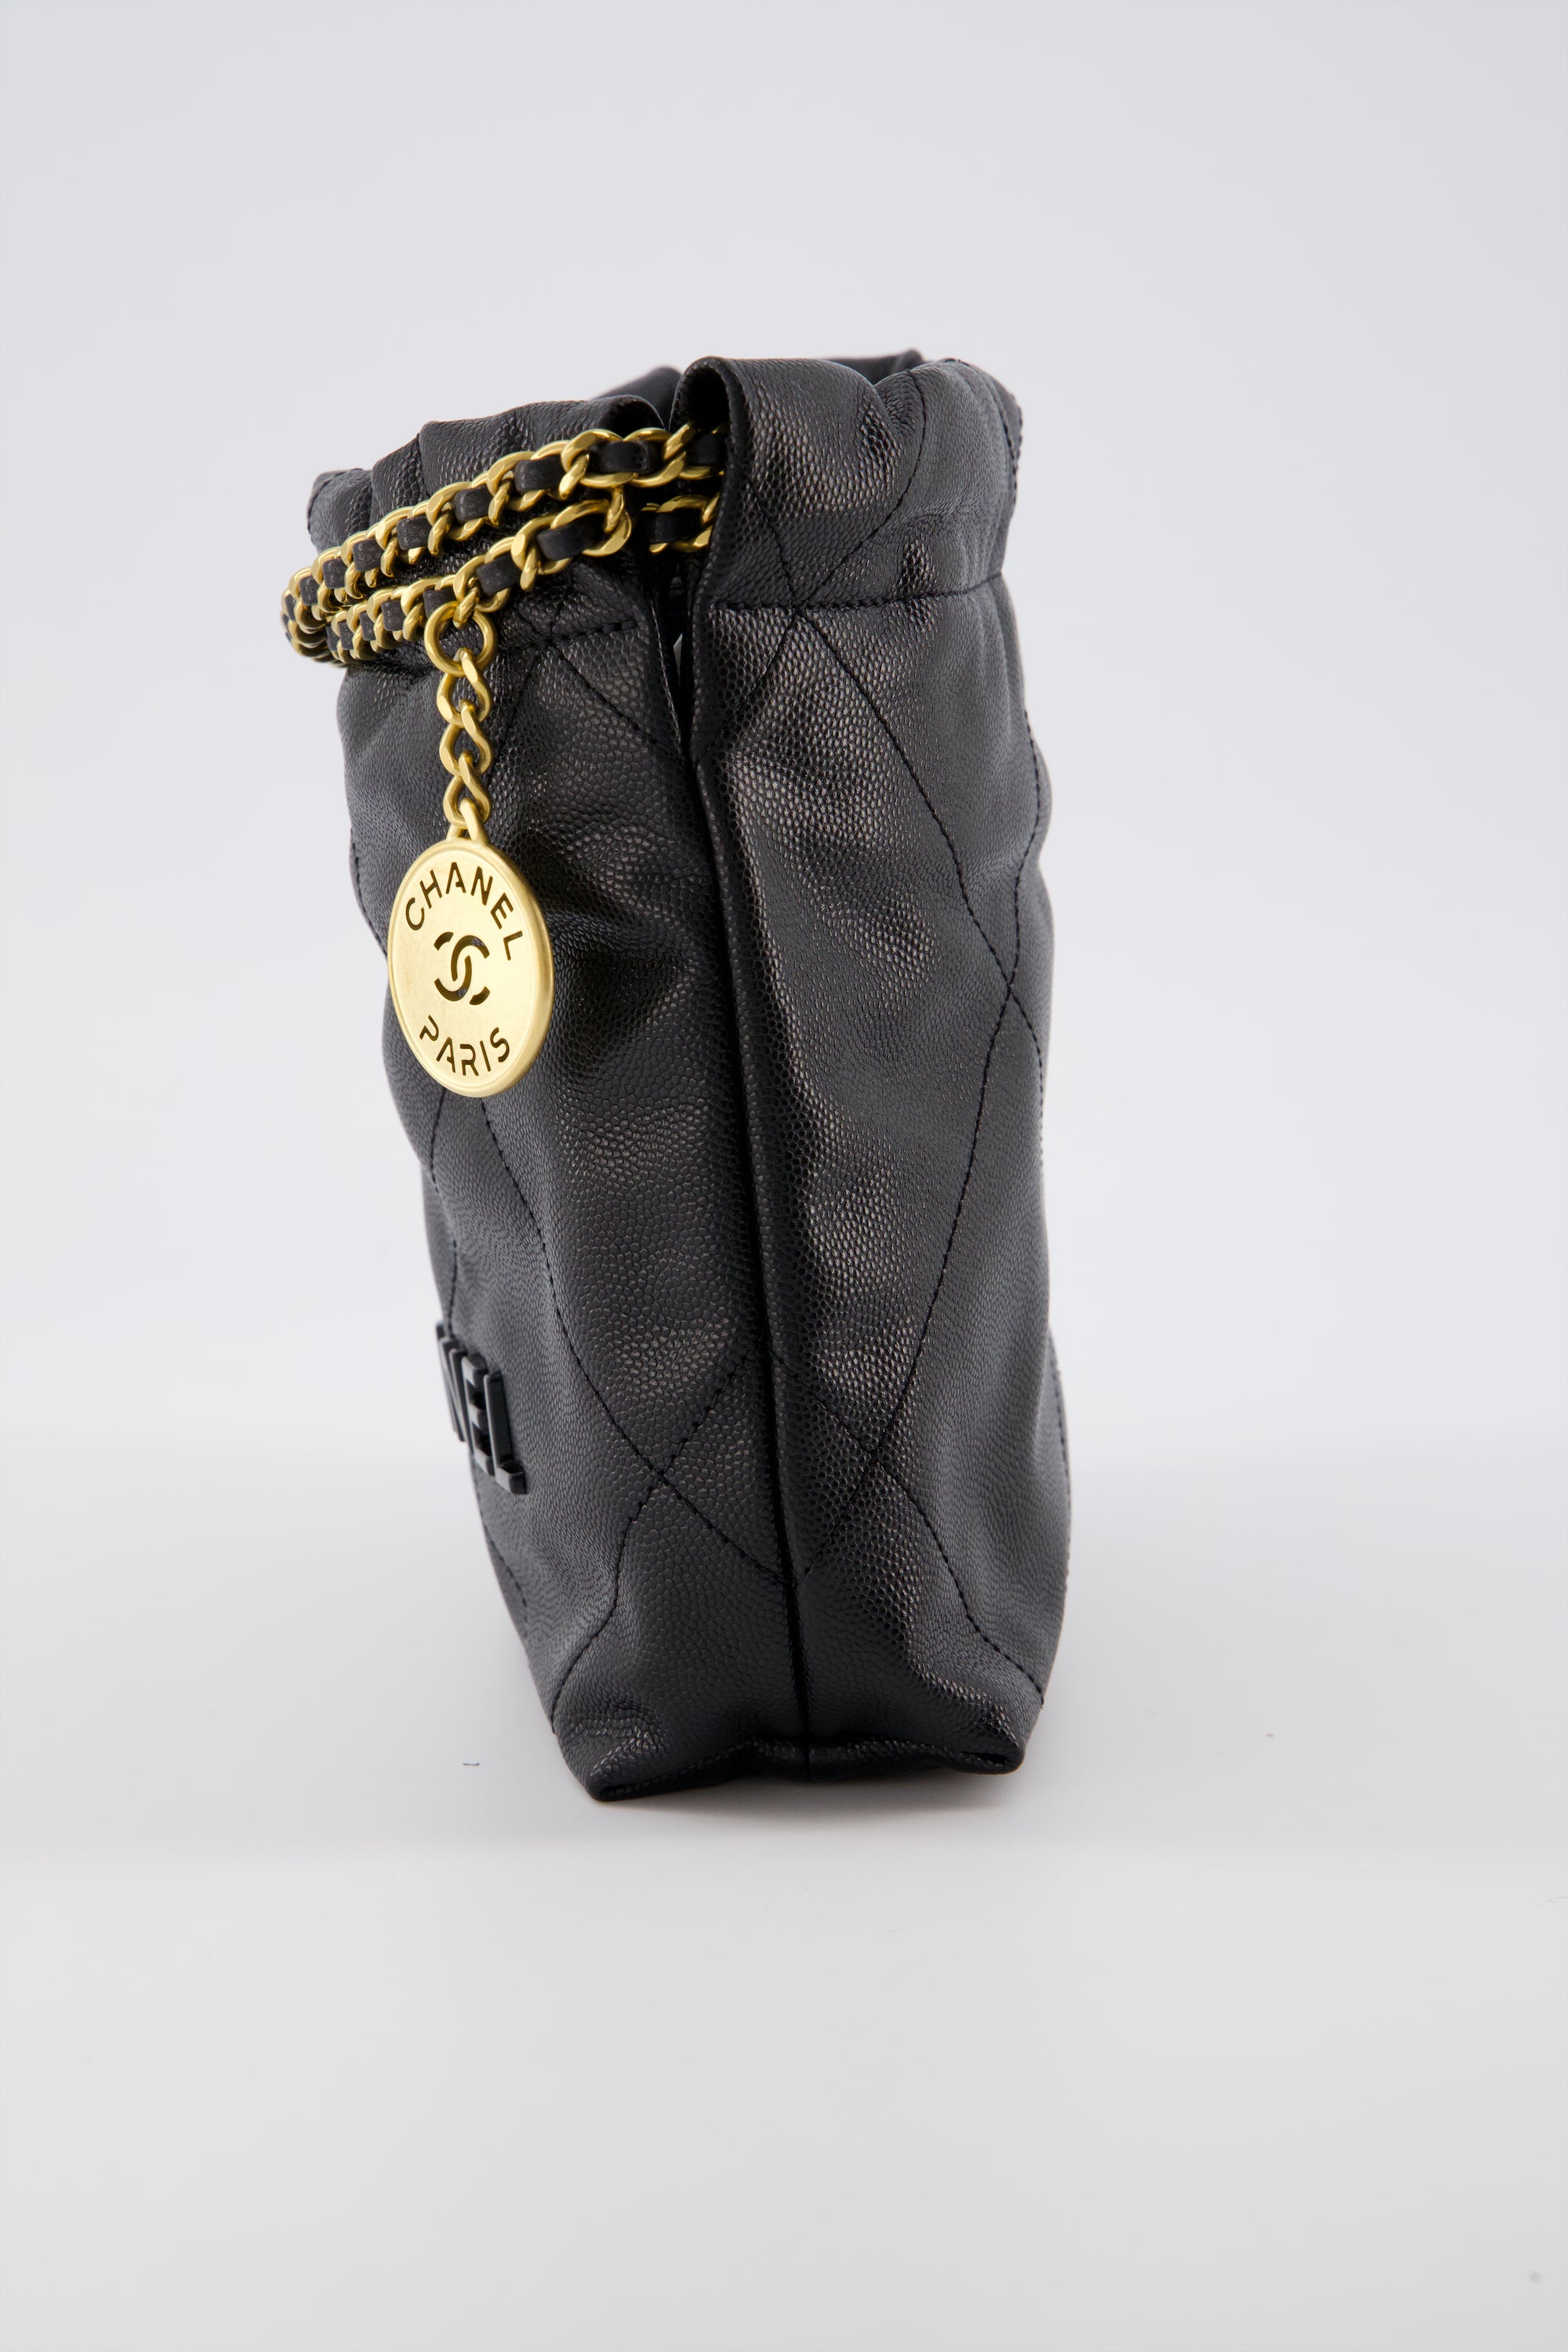 Chanel So Black Mini 22 Bag